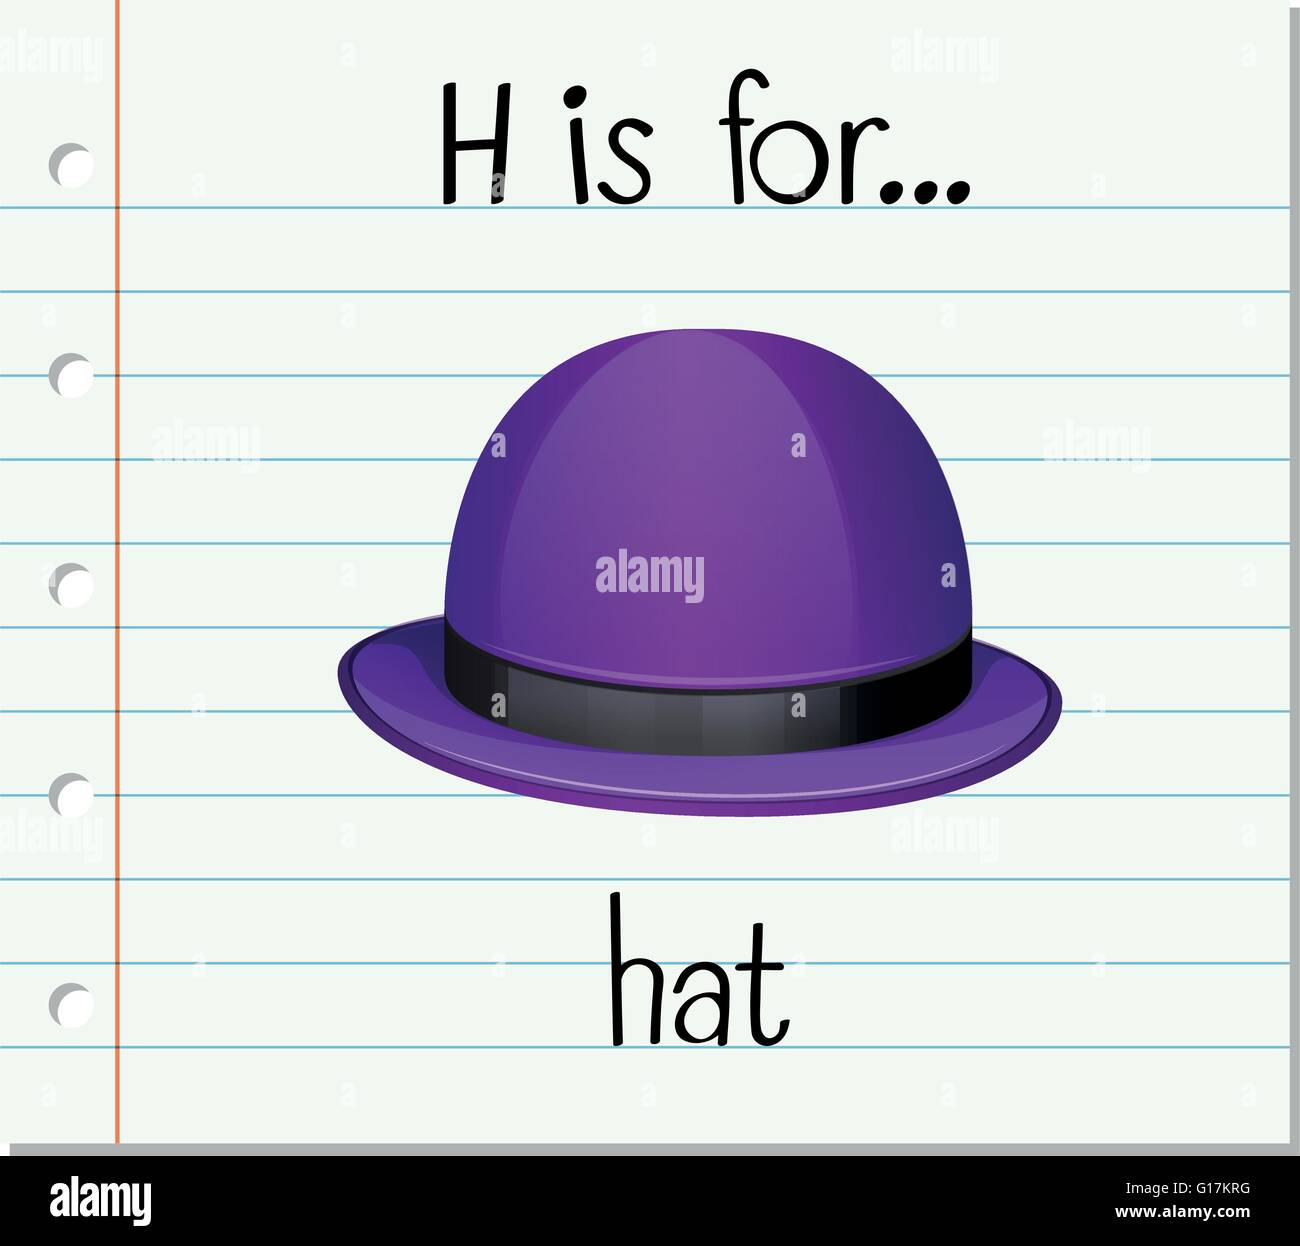 Flashcard letter H is for hat illustration Stock Vector